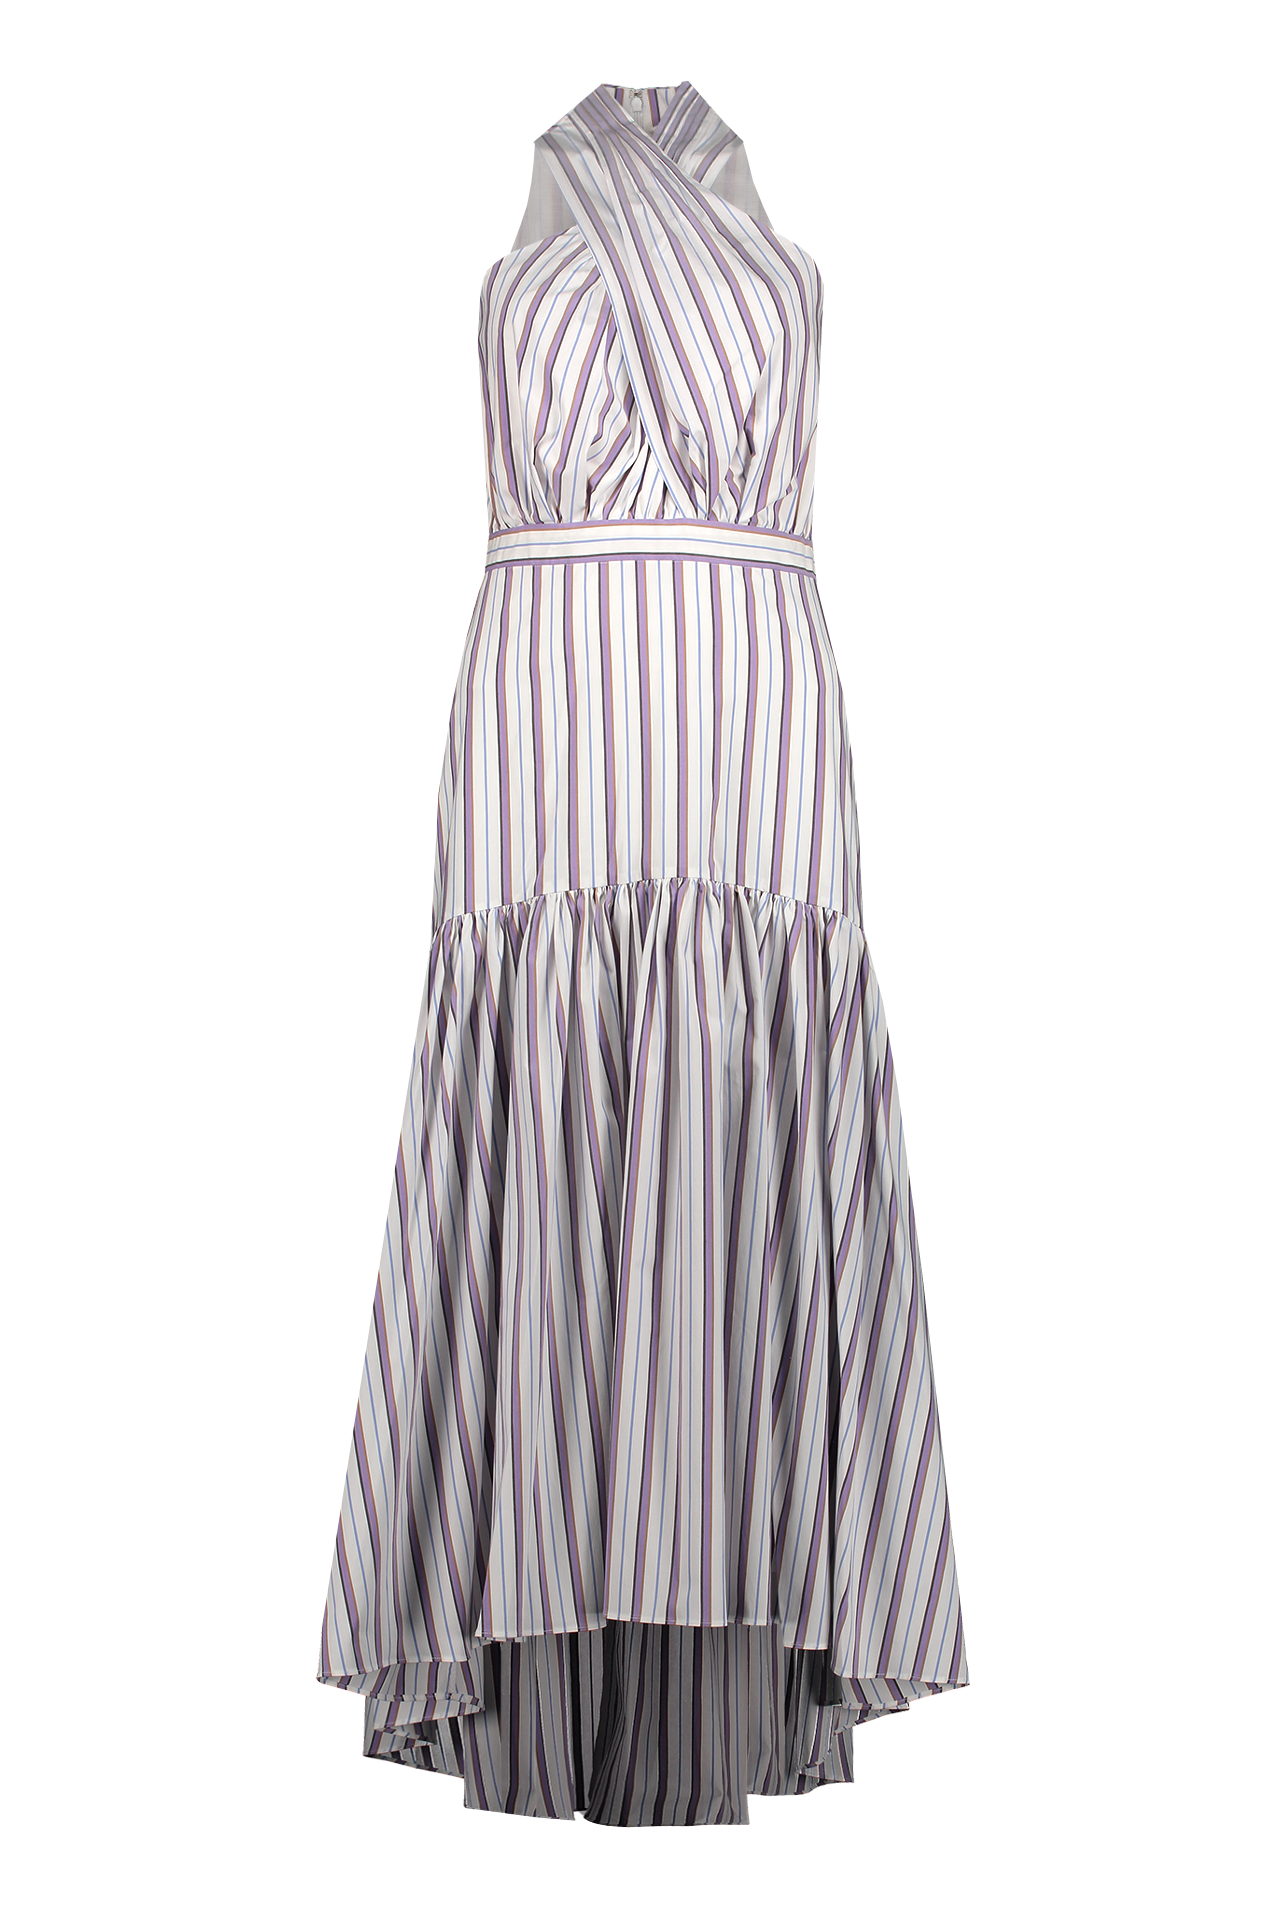 SWAK Designs Review Follow-up + Veronica Dress